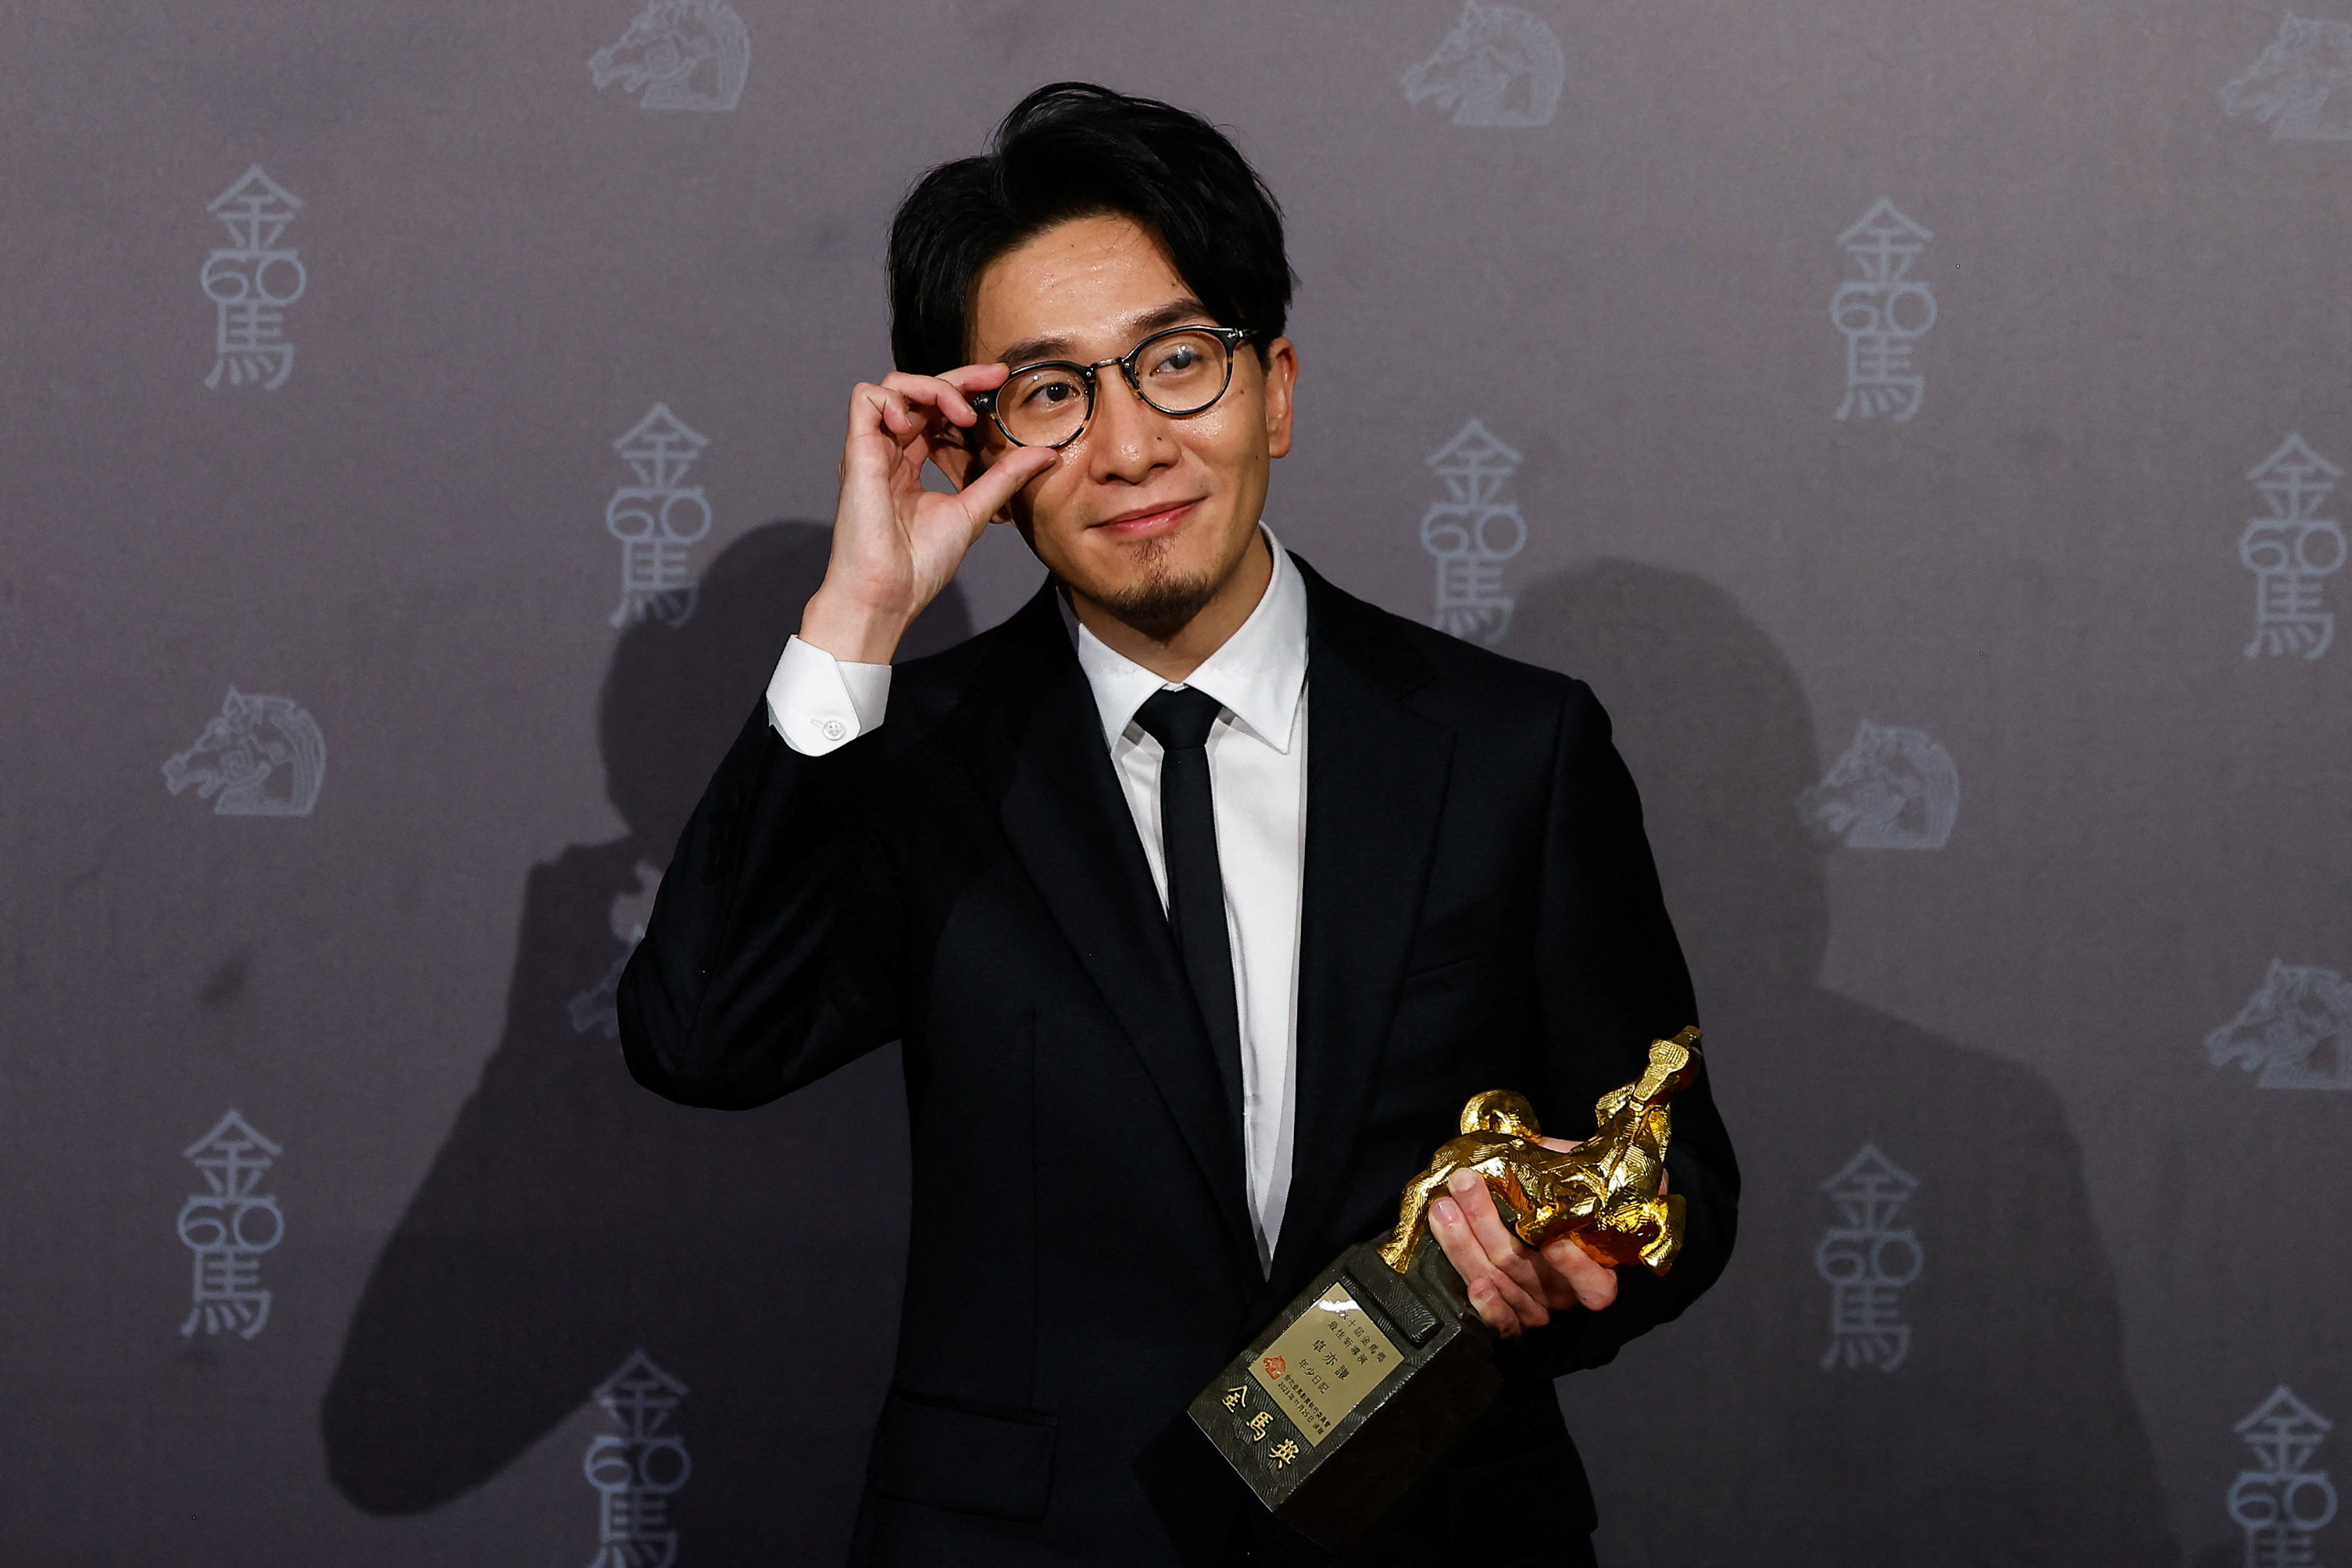 Hong Kong filmmaker Nick Cheuk has won best new director at the 60th Golden Horse Awards in Taiwan. Photo: Reuters